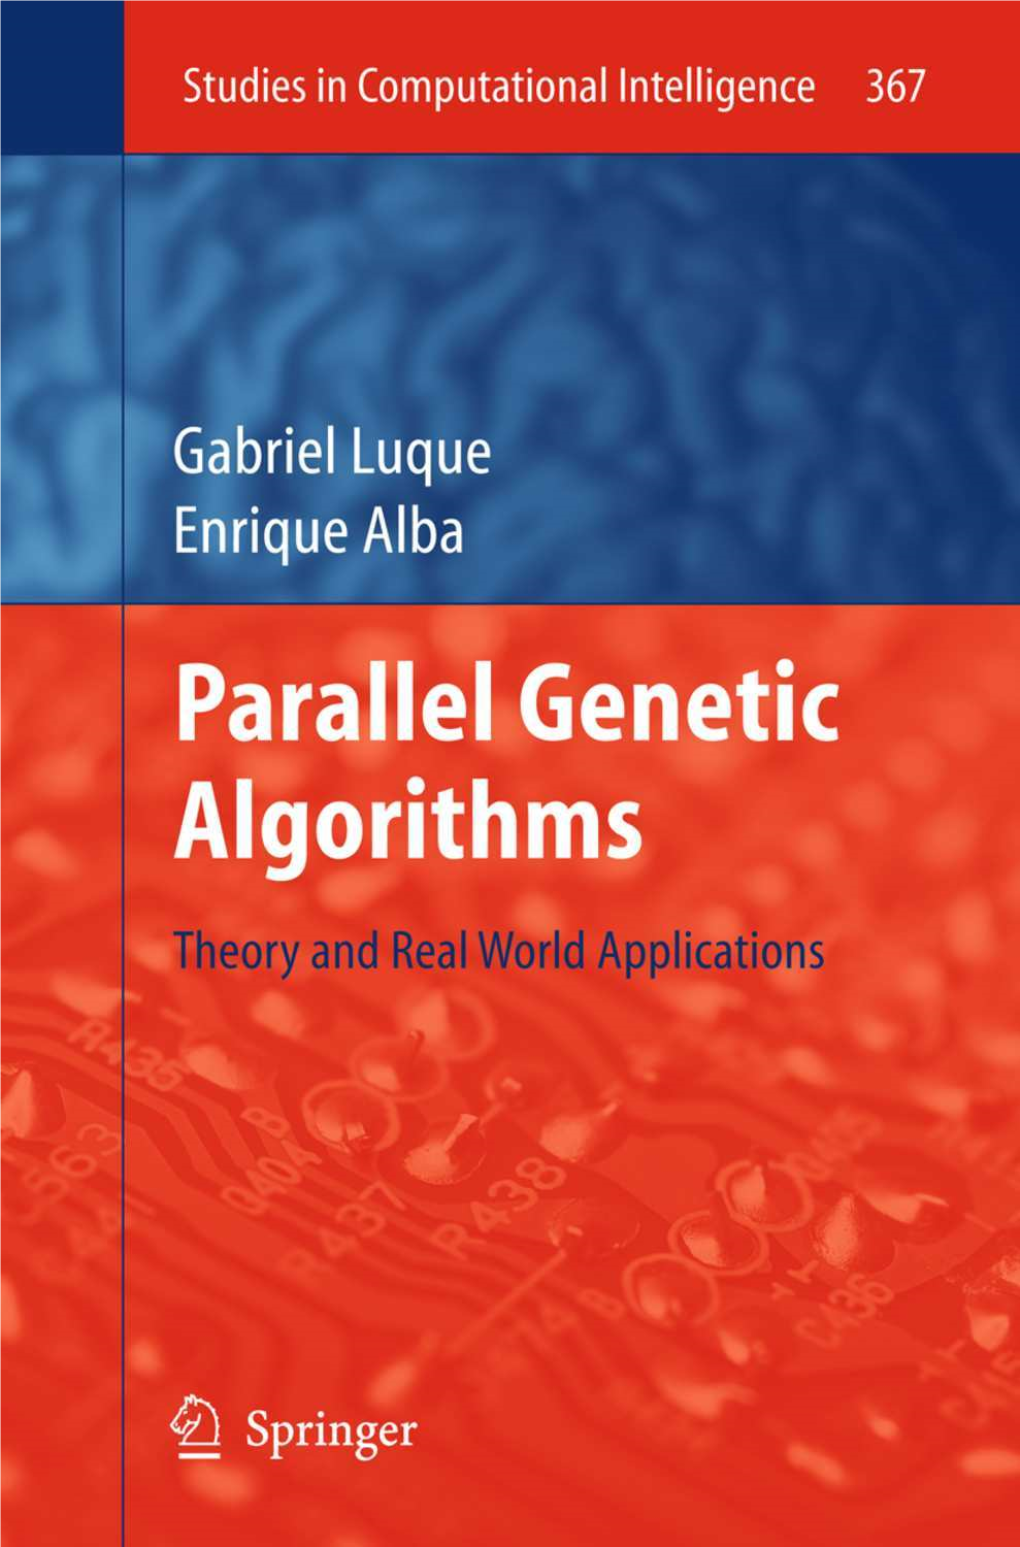 Parallel Genetic Algorithms Studies in Computational Intelligence,Volume 367 Editor-In-Chief Prof